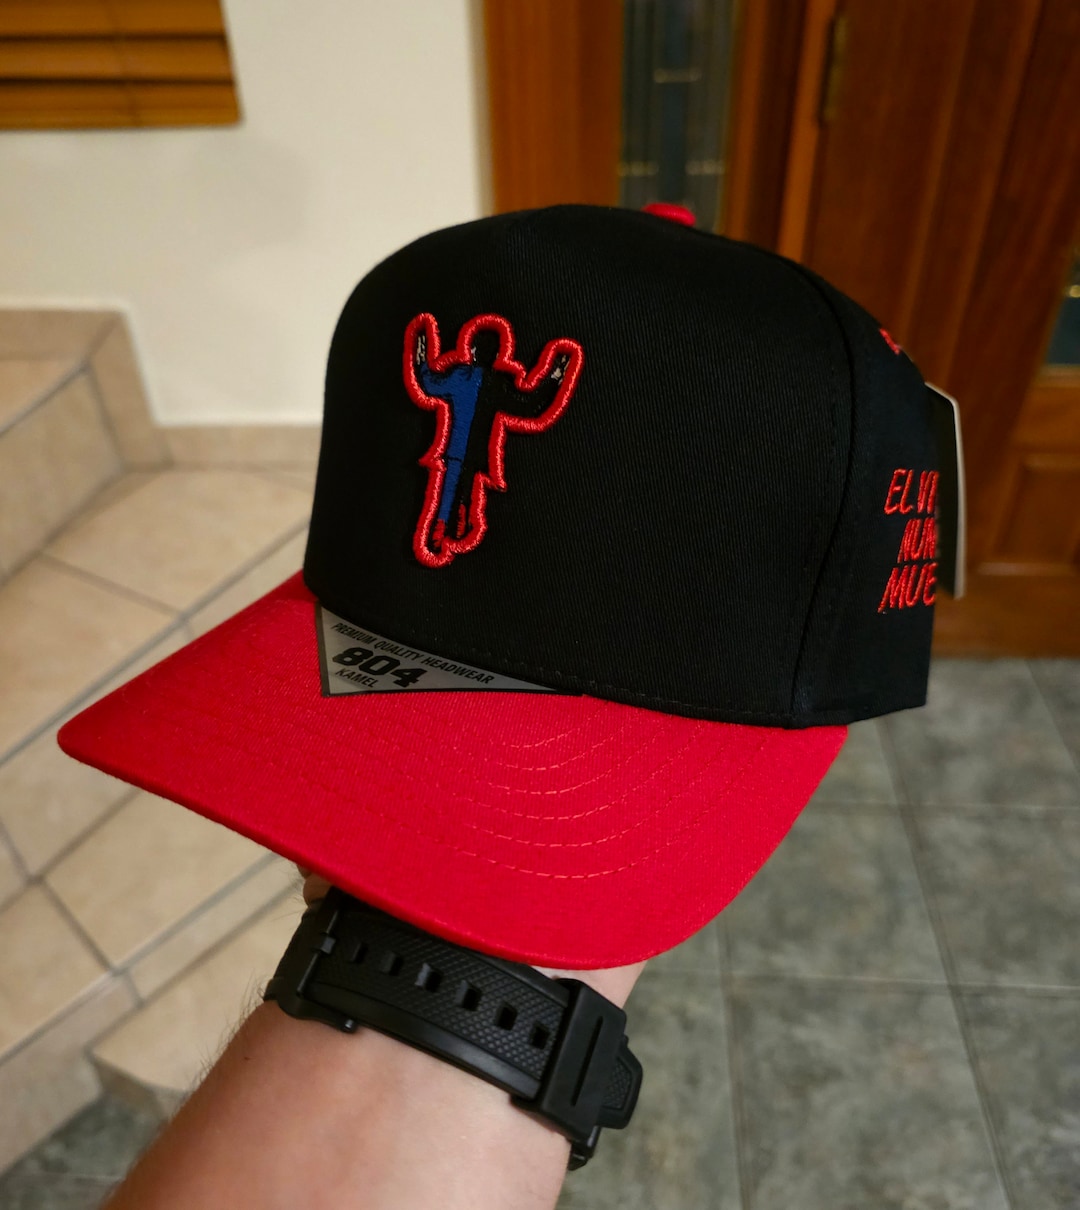 El Chino Antrax Belico Snapback Hat Black Culiacan Sinaloa Mayiza ...